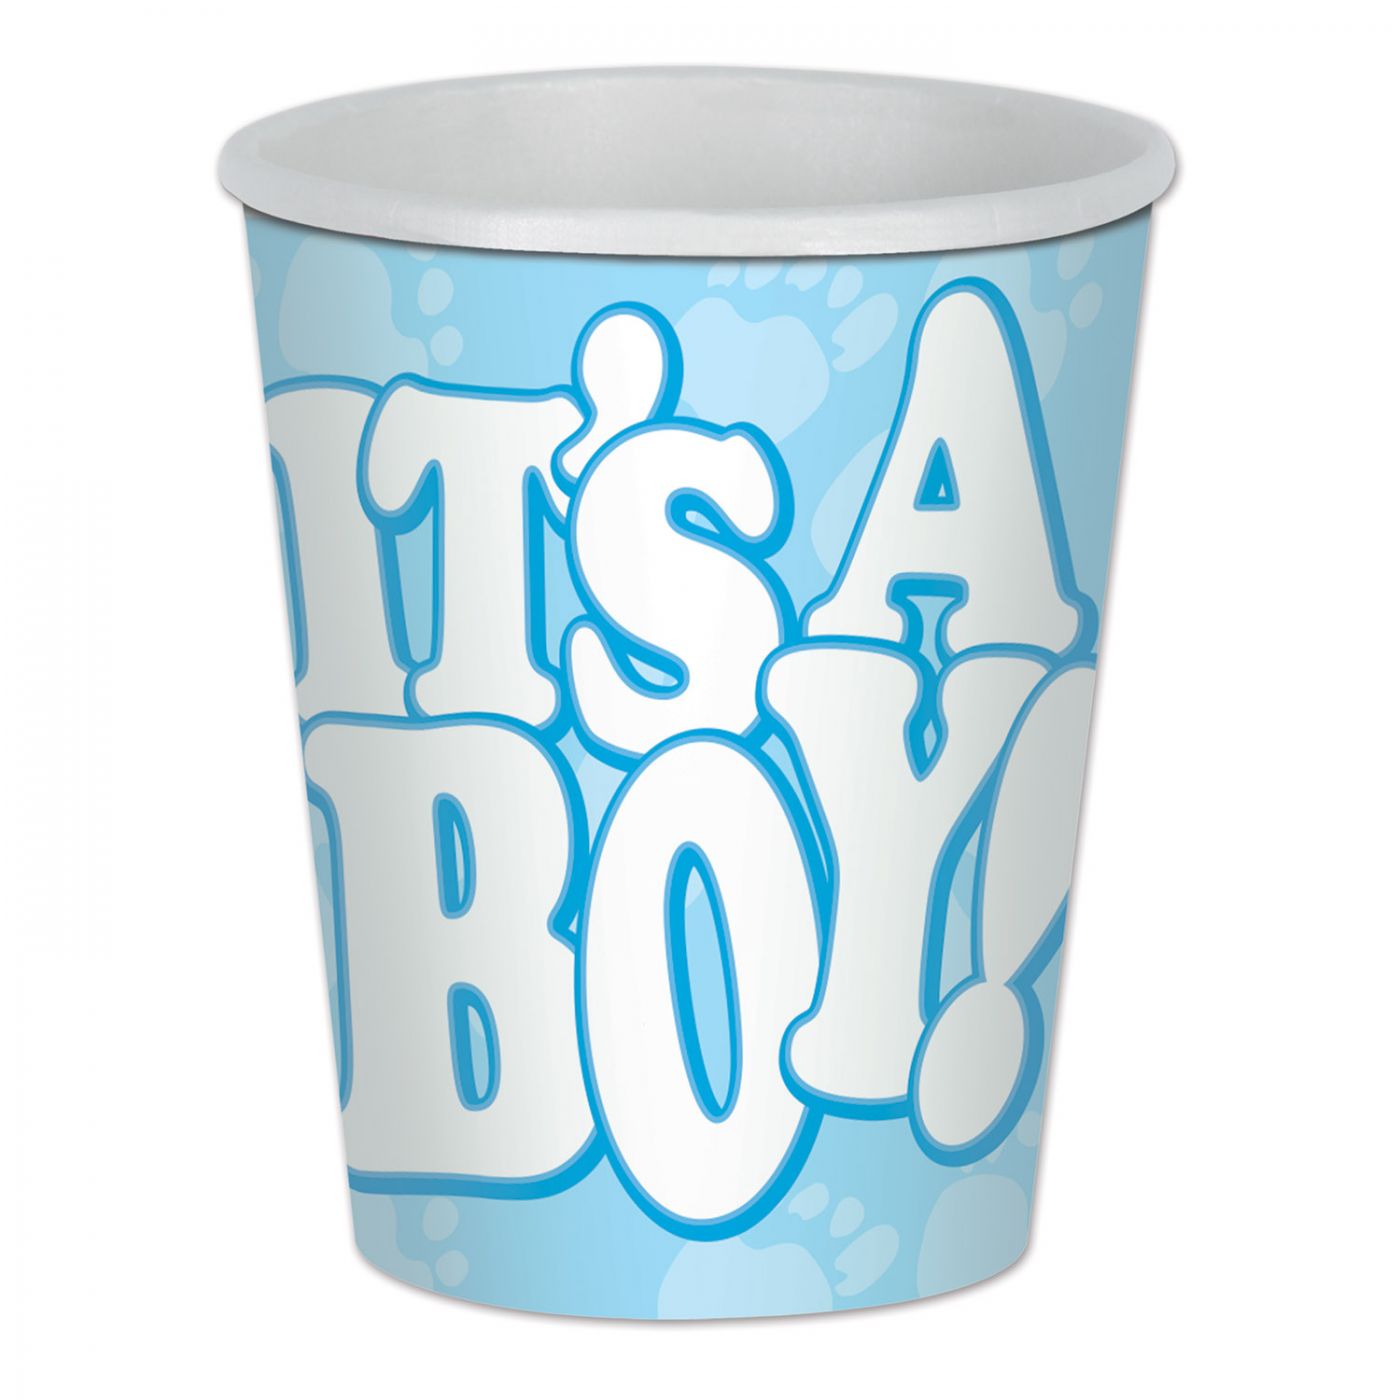 It's A Boy! Beverage Cups (12) image